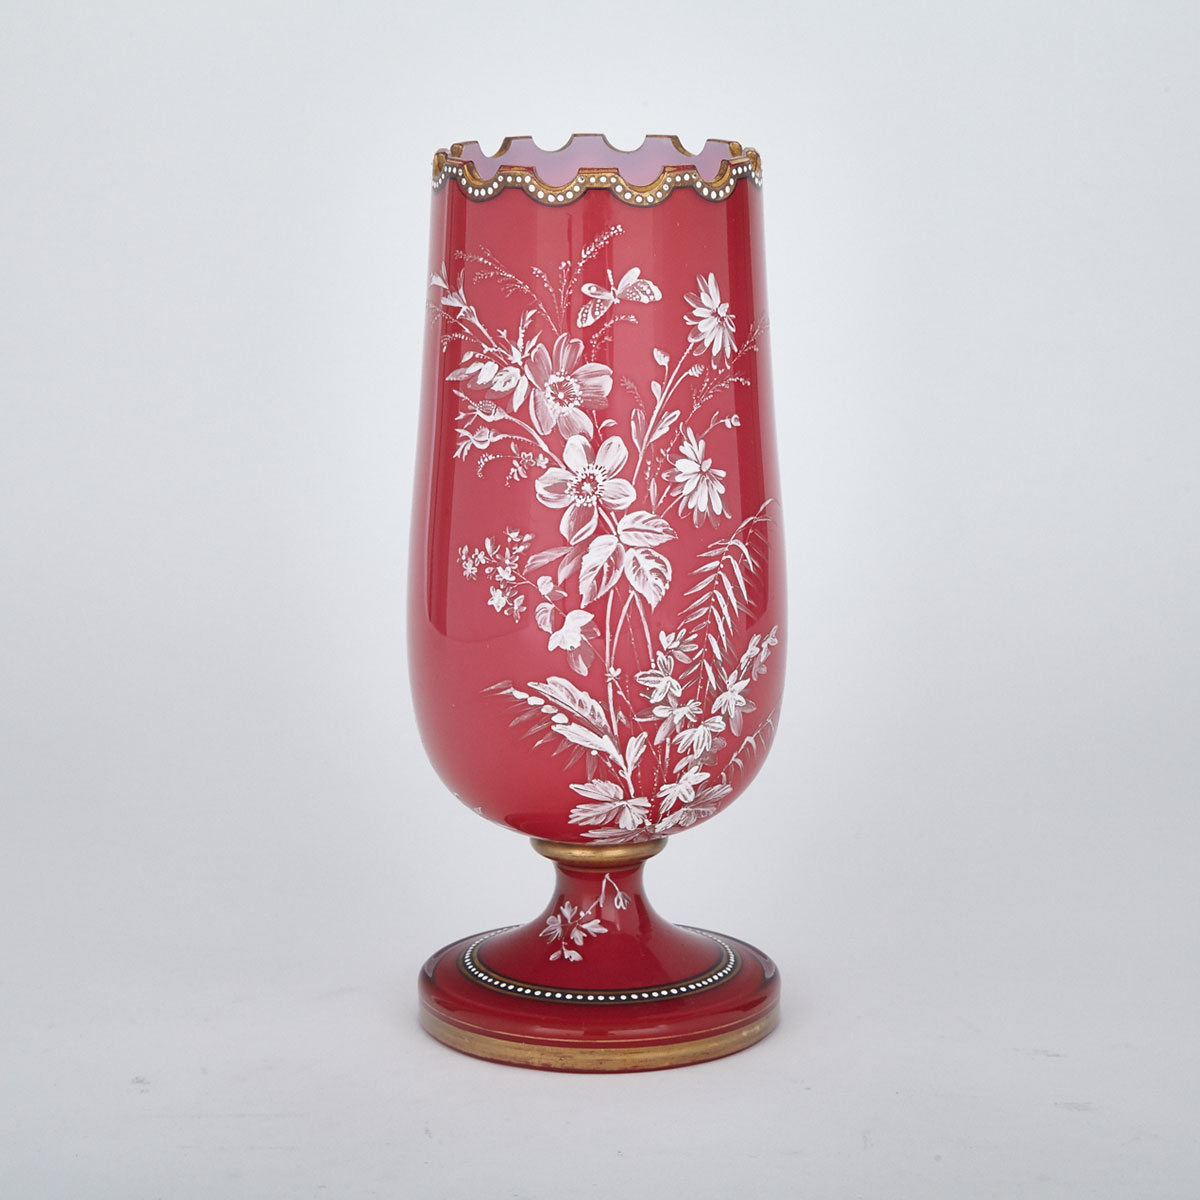 English Overlaid and Enameled Red Glass Vase, c.1870